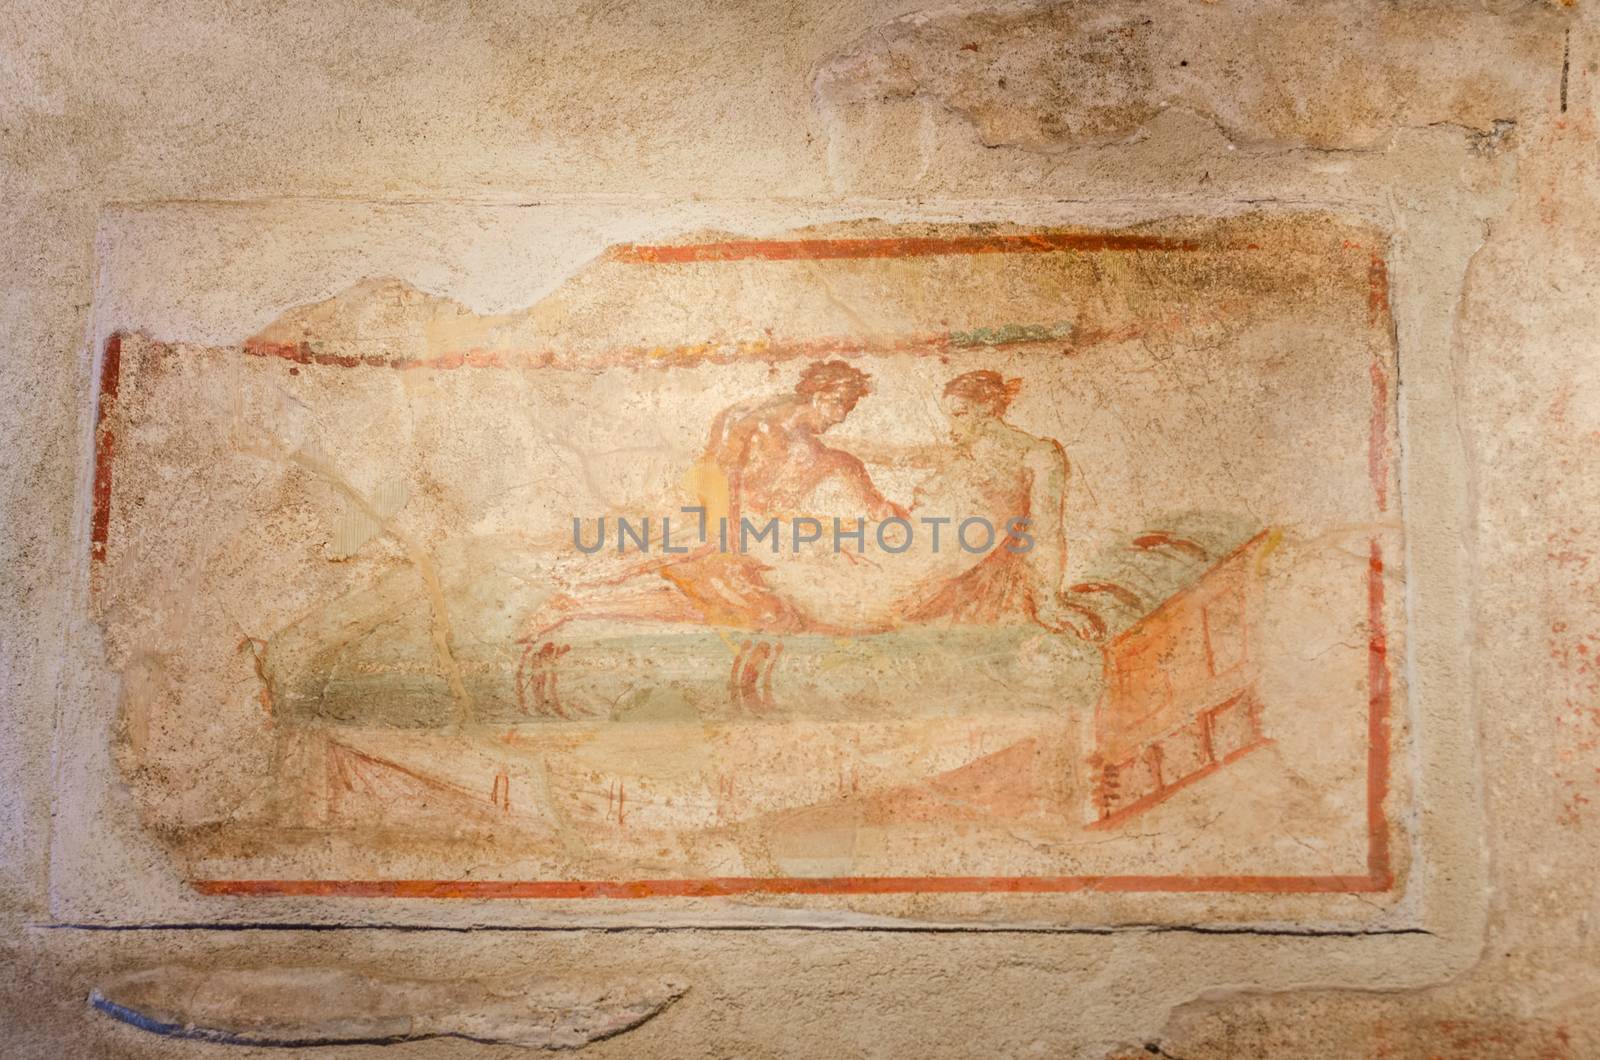 Ancient Roman fresco in Pompeii ruins, Italy.